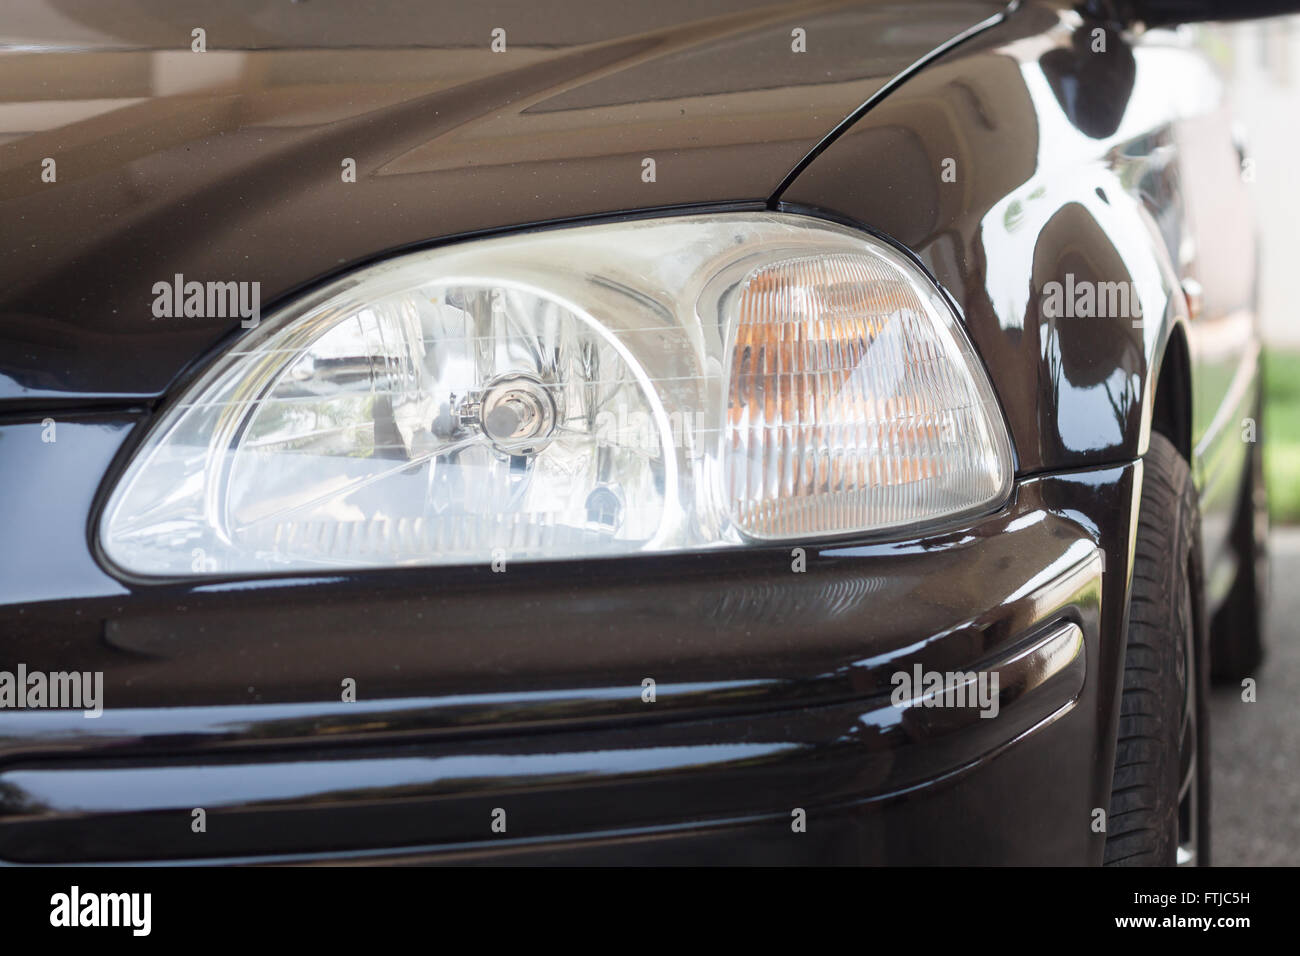 Closeup headlight of black coupe, stock photo Stock Photo